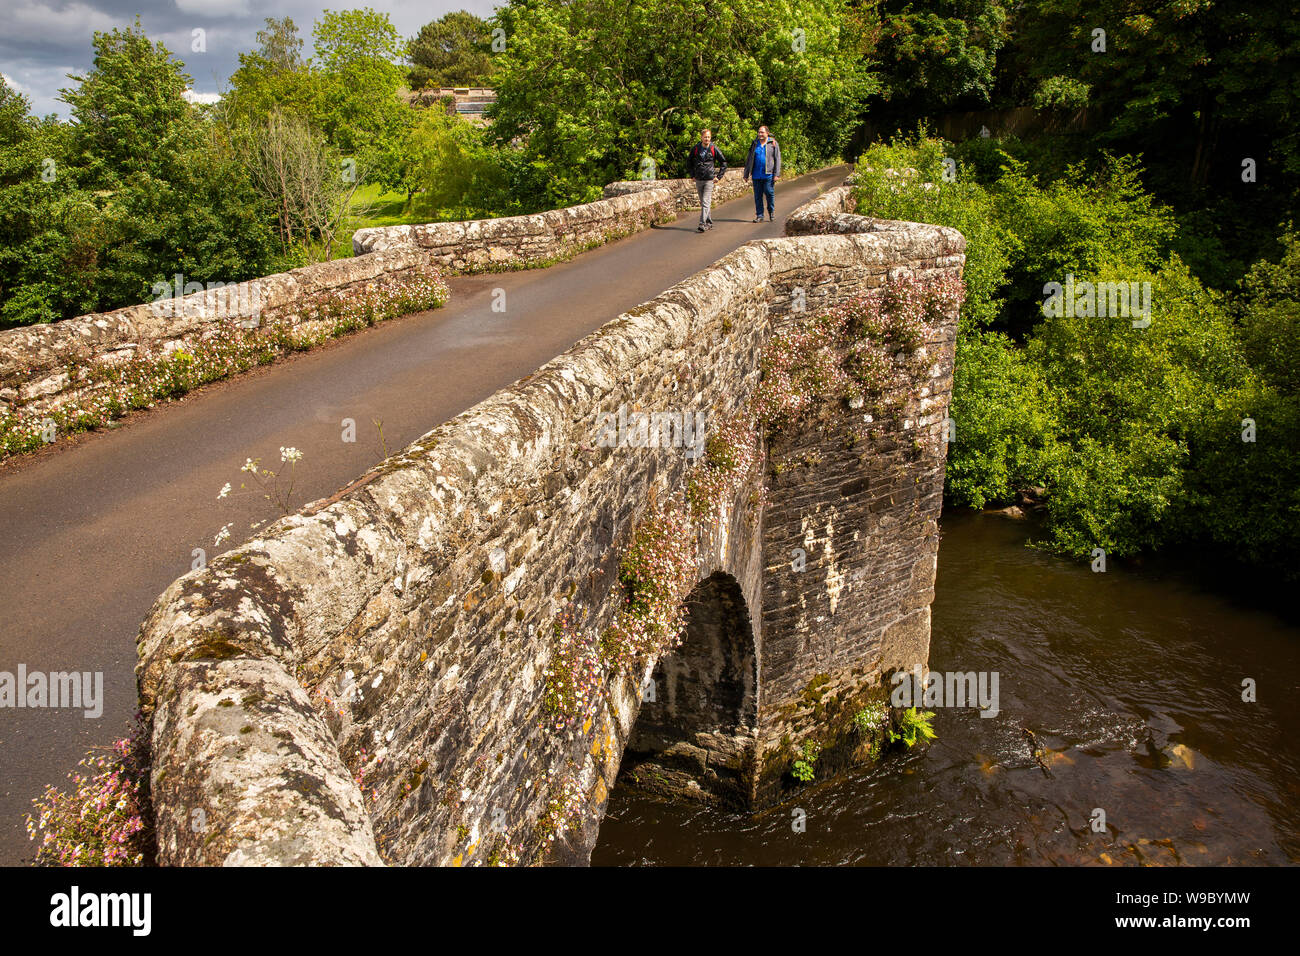 UK, England, Devon, Staverton, two male walkers crossing old stone bridge over River Dart Stock Photo